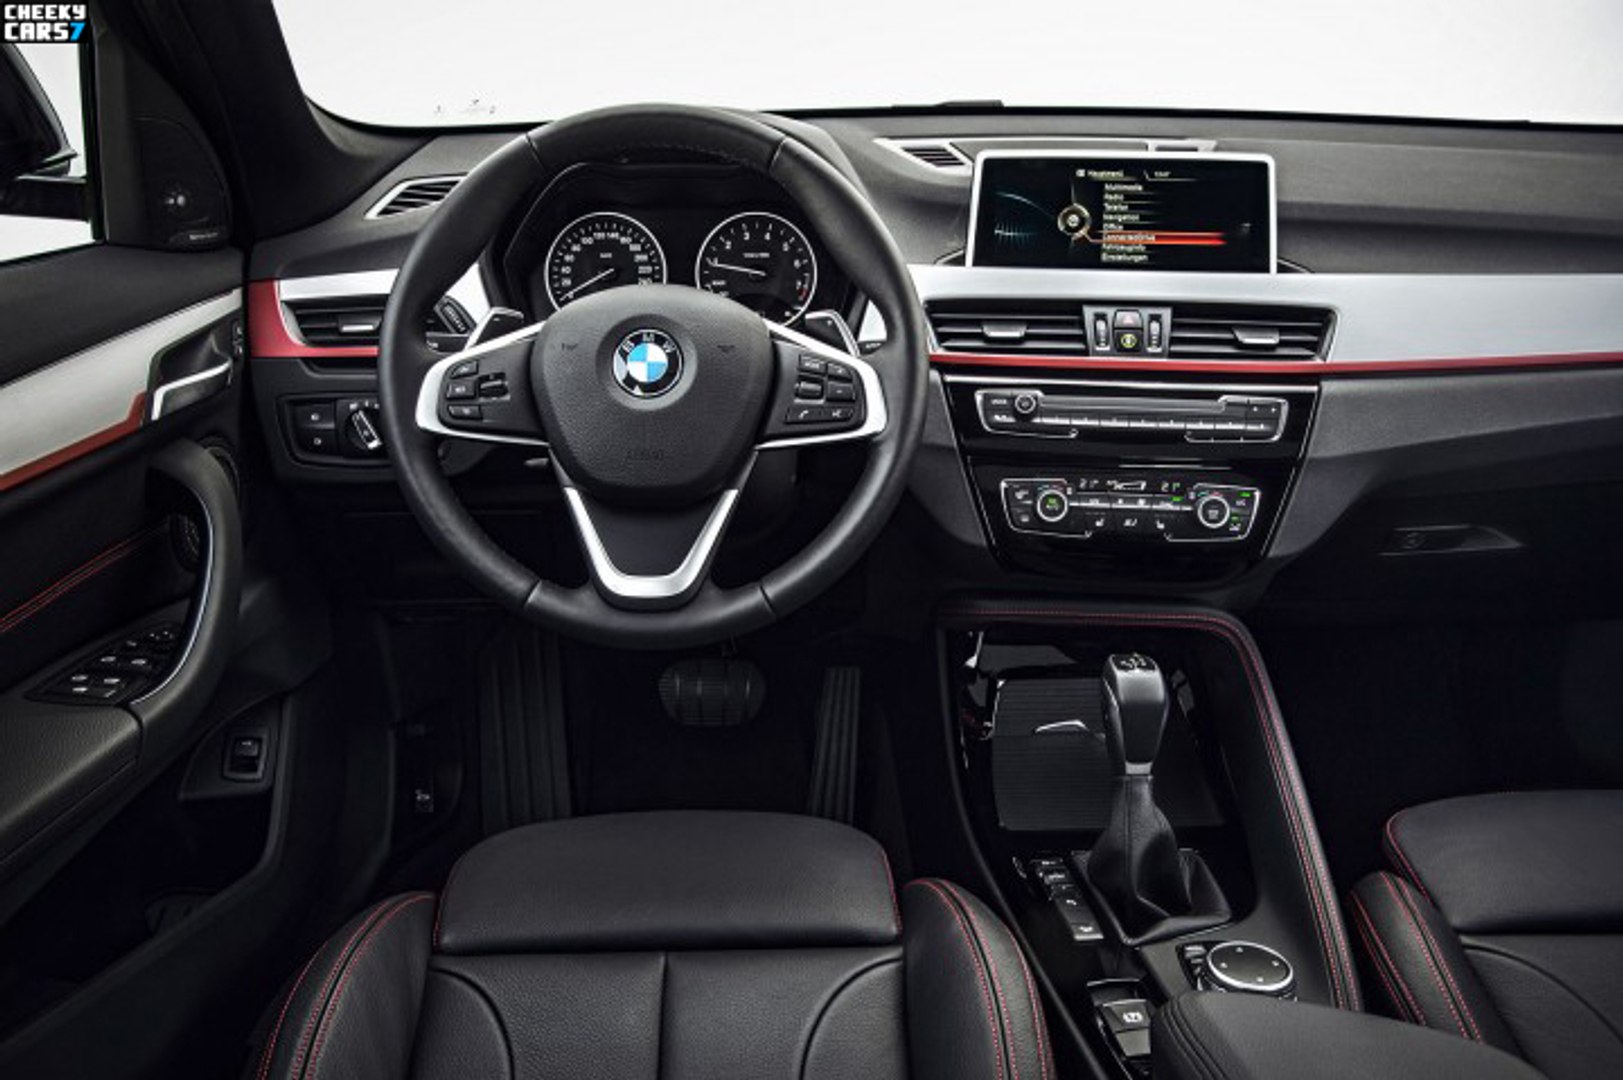 BMW X1 2015 F48 interior / New crossover SUV BMW 2016 - video Dailymotion